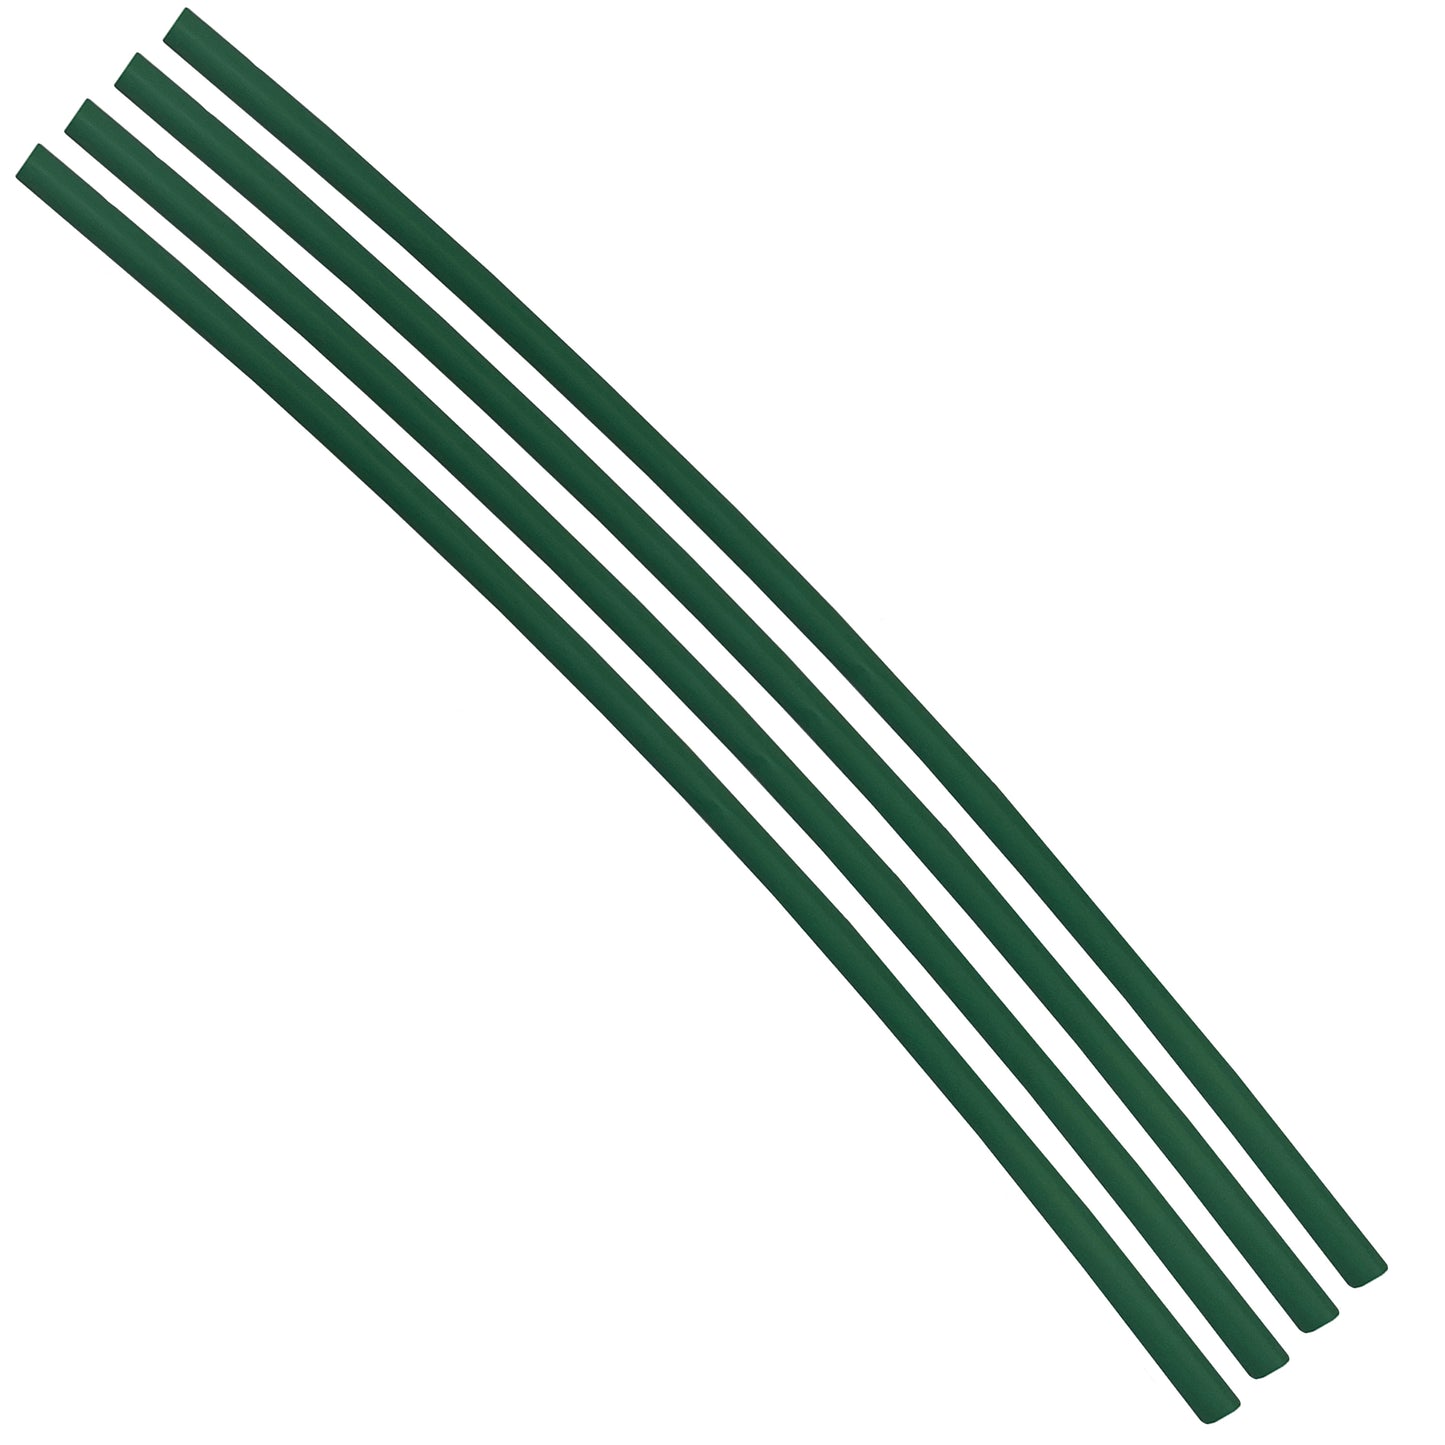 Flexible Thin Single Wall Non-Adhesive Heat Shrink Tubing 2:1 Green 3/16" ID - 100' Ft Spool